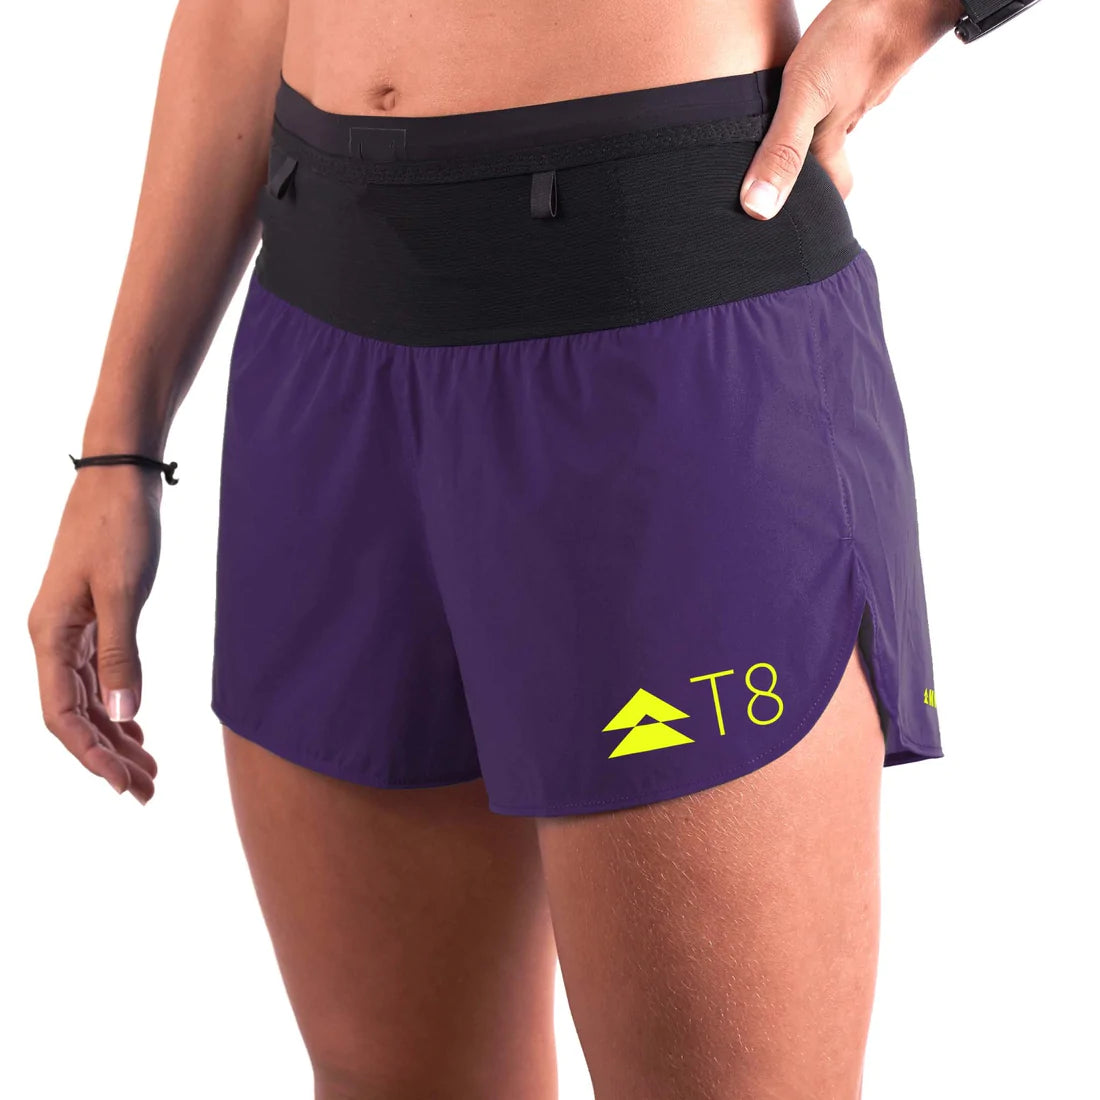 T8 Sherpa Shorts V2 (Women's) - Find Your Feet Australia Hobart Launceston Tasmania - Purple